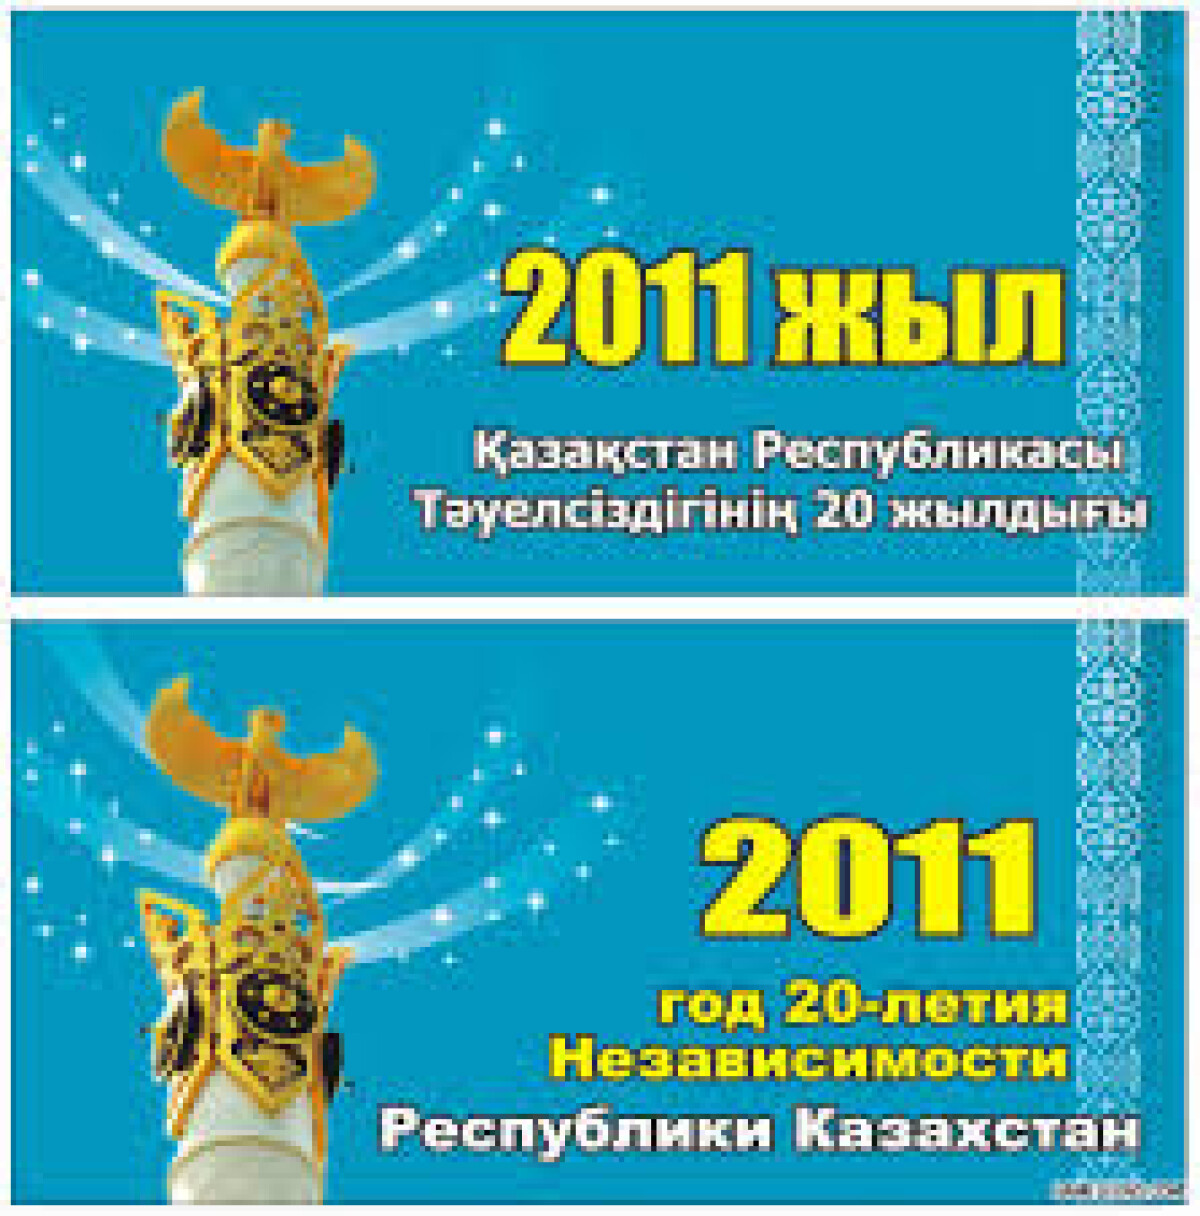 "Problems and prospects of post-crisis development of economy of Kazakhstan" - e-history.kz